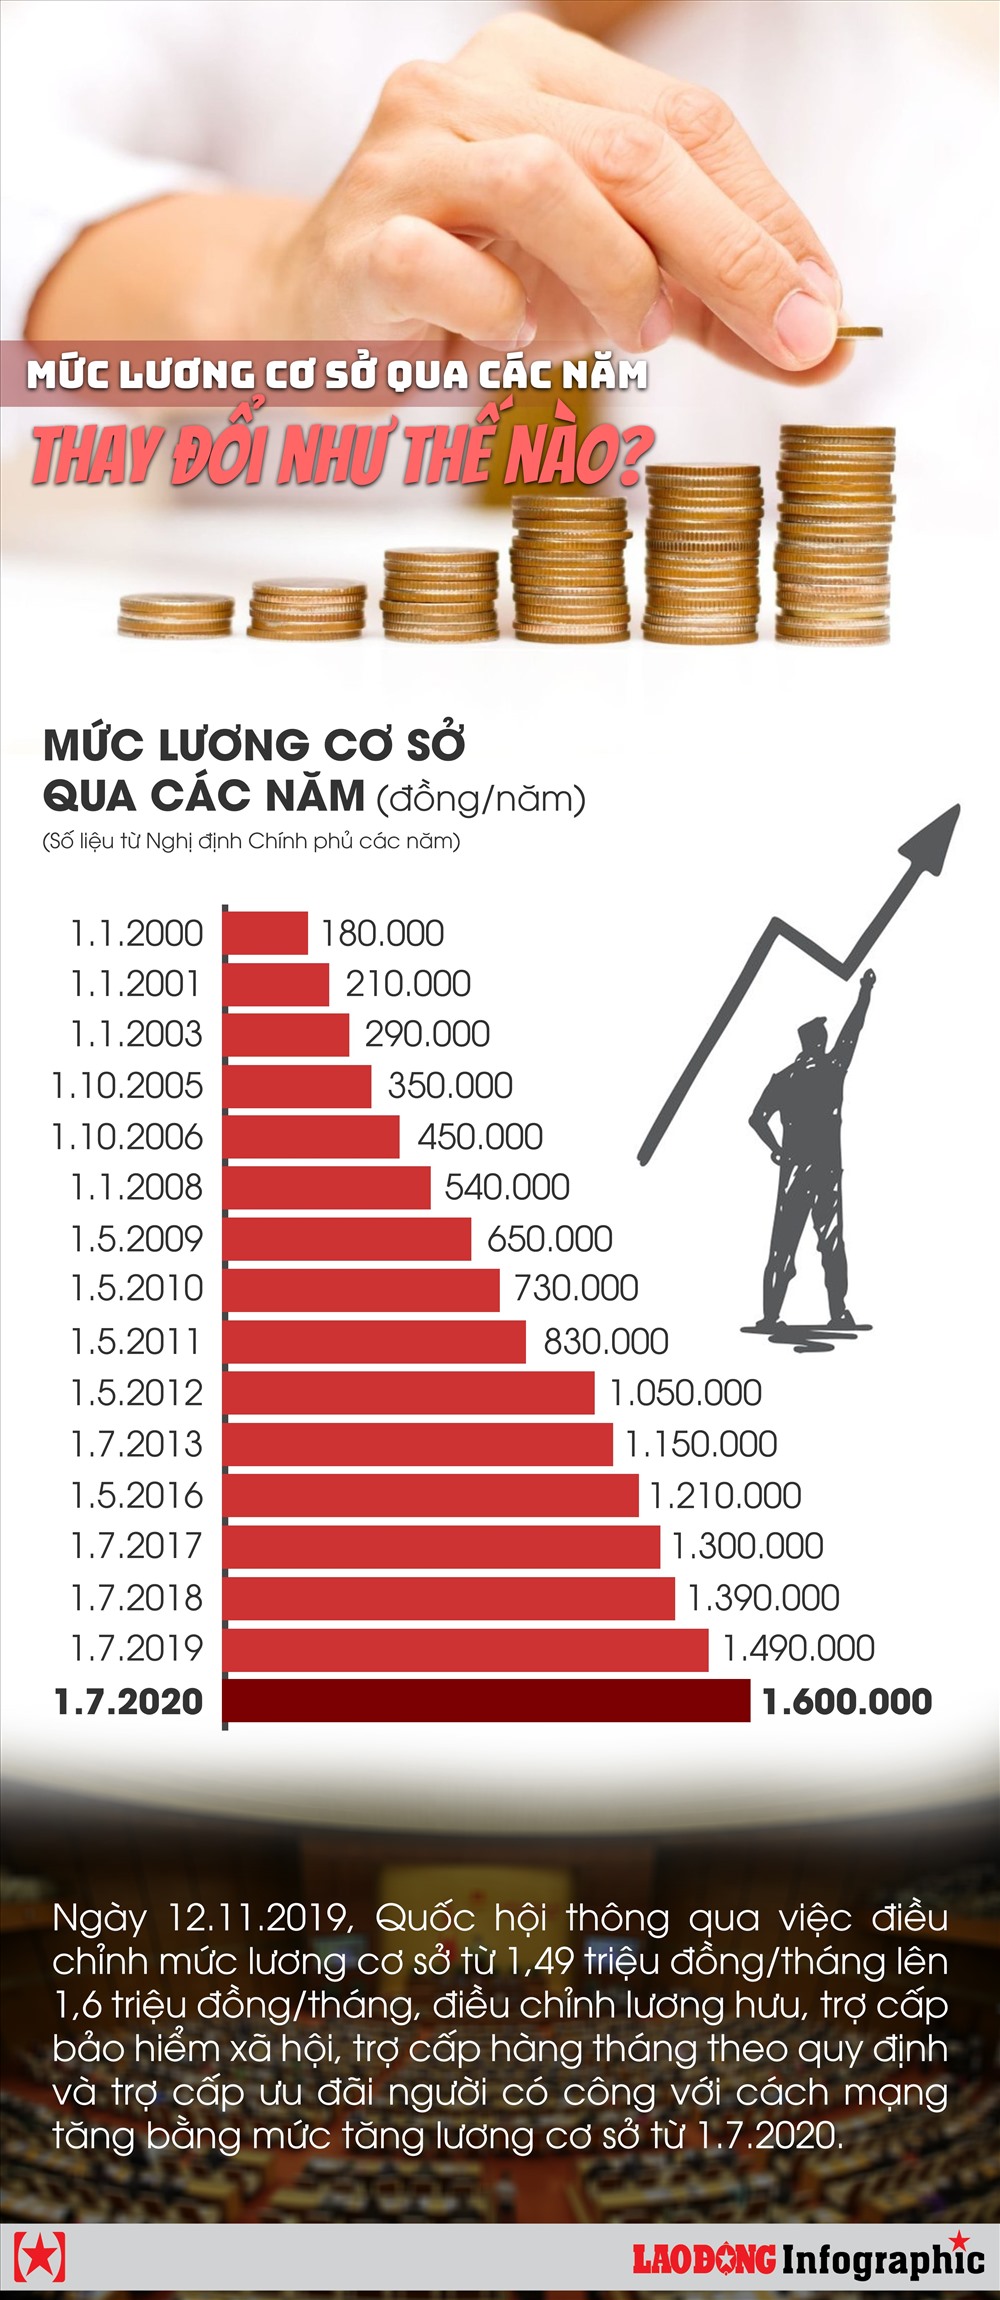 infographic muc luong co so qua cac nam thay doi nhu the nao